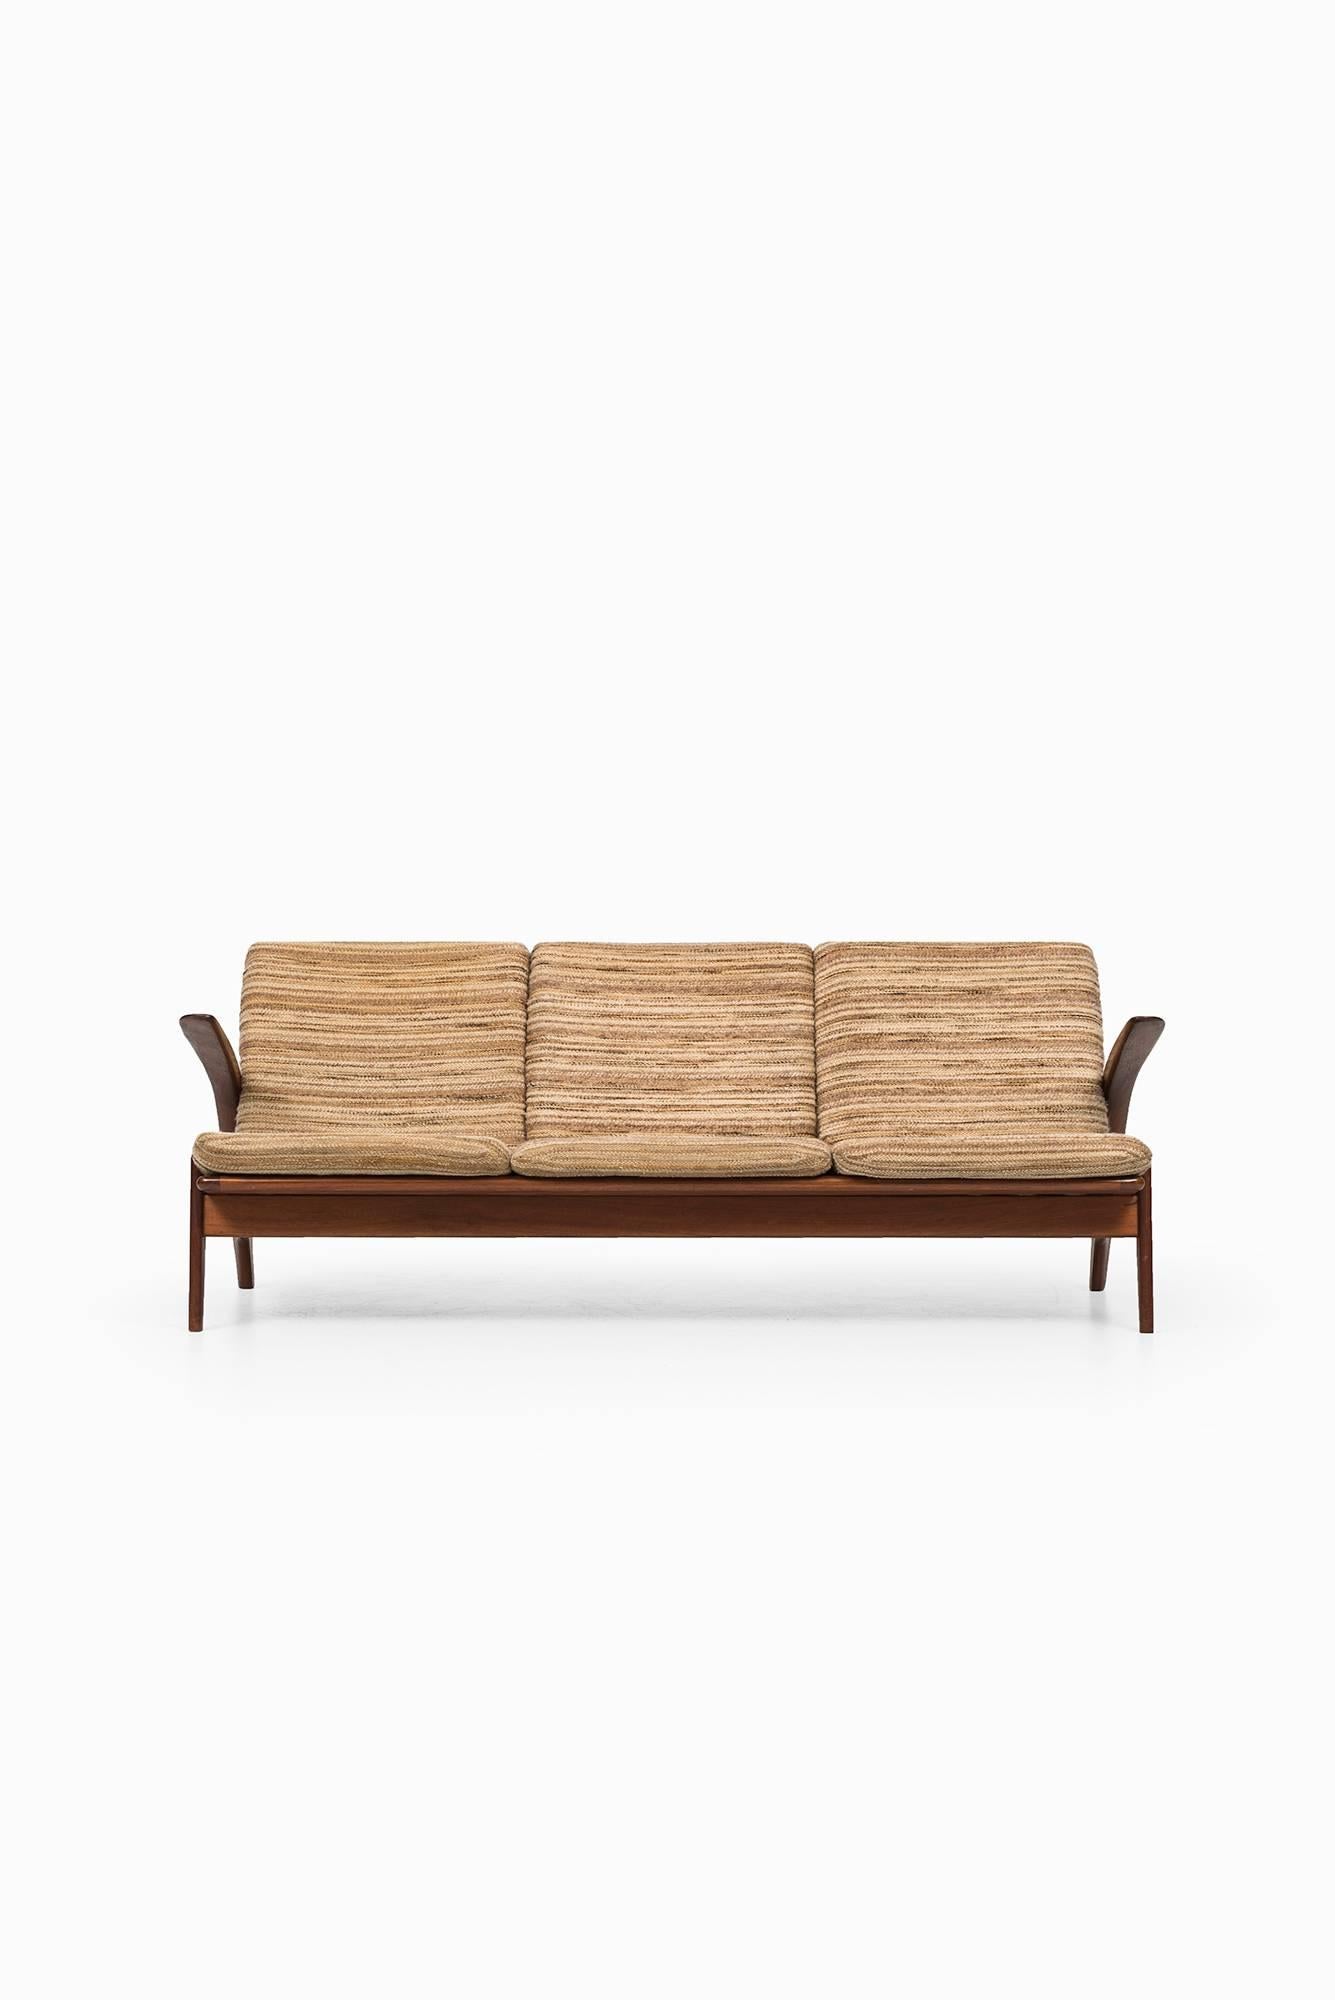 Scandinavian Modern Rolf Rastad & Adolf Relling sofa produced by Arnestad Bruk in Norway